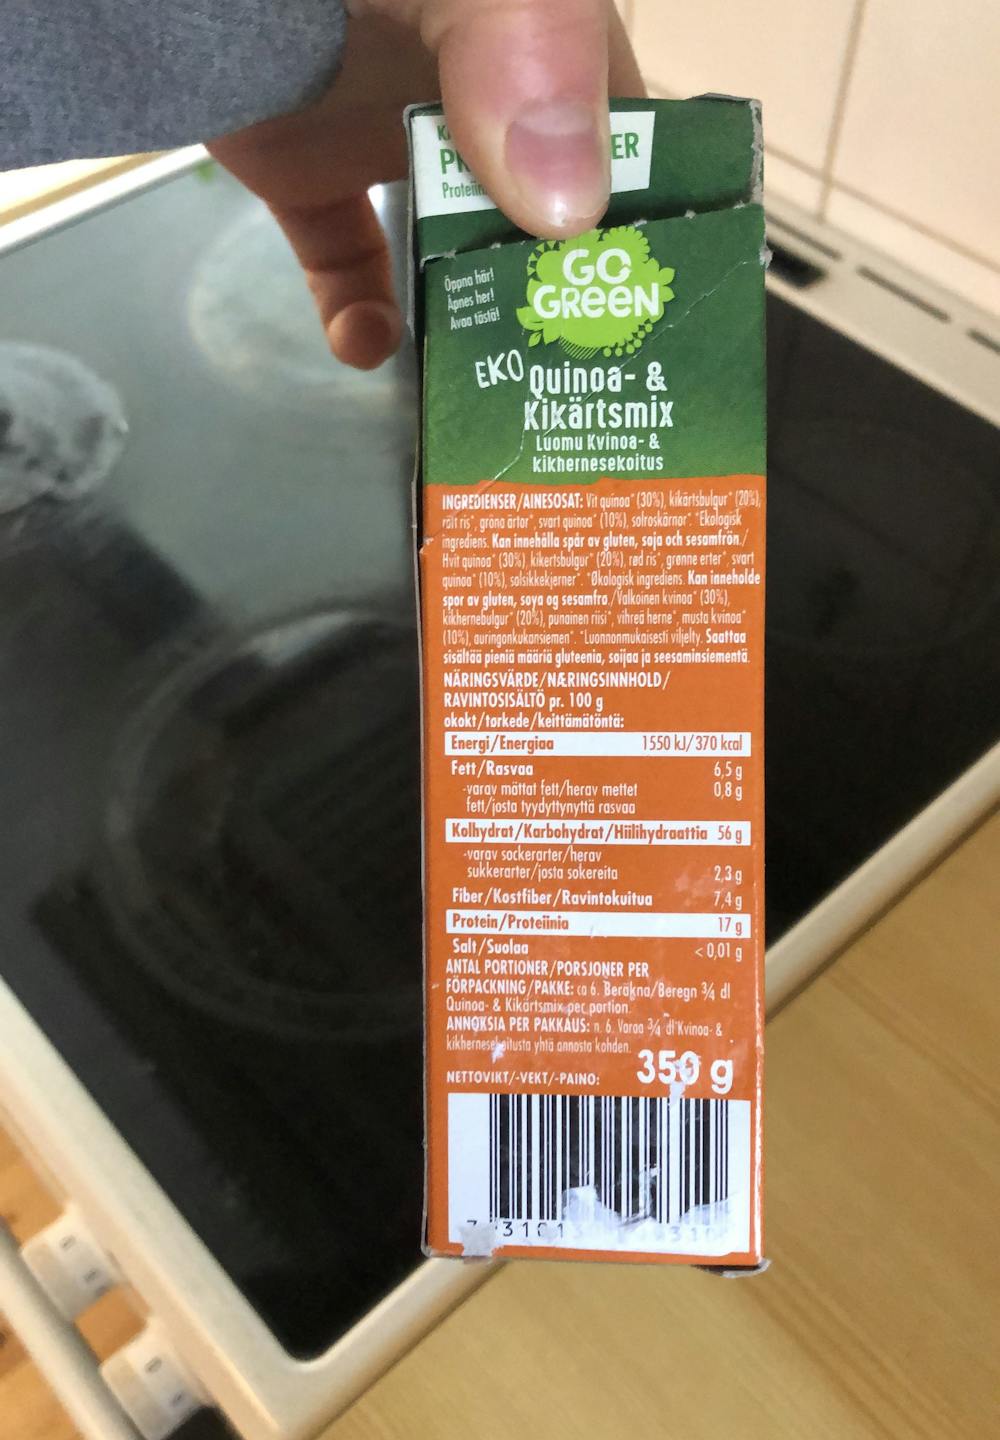 Ingredienslisten til Quinoa- & kikärtmix, Go Green